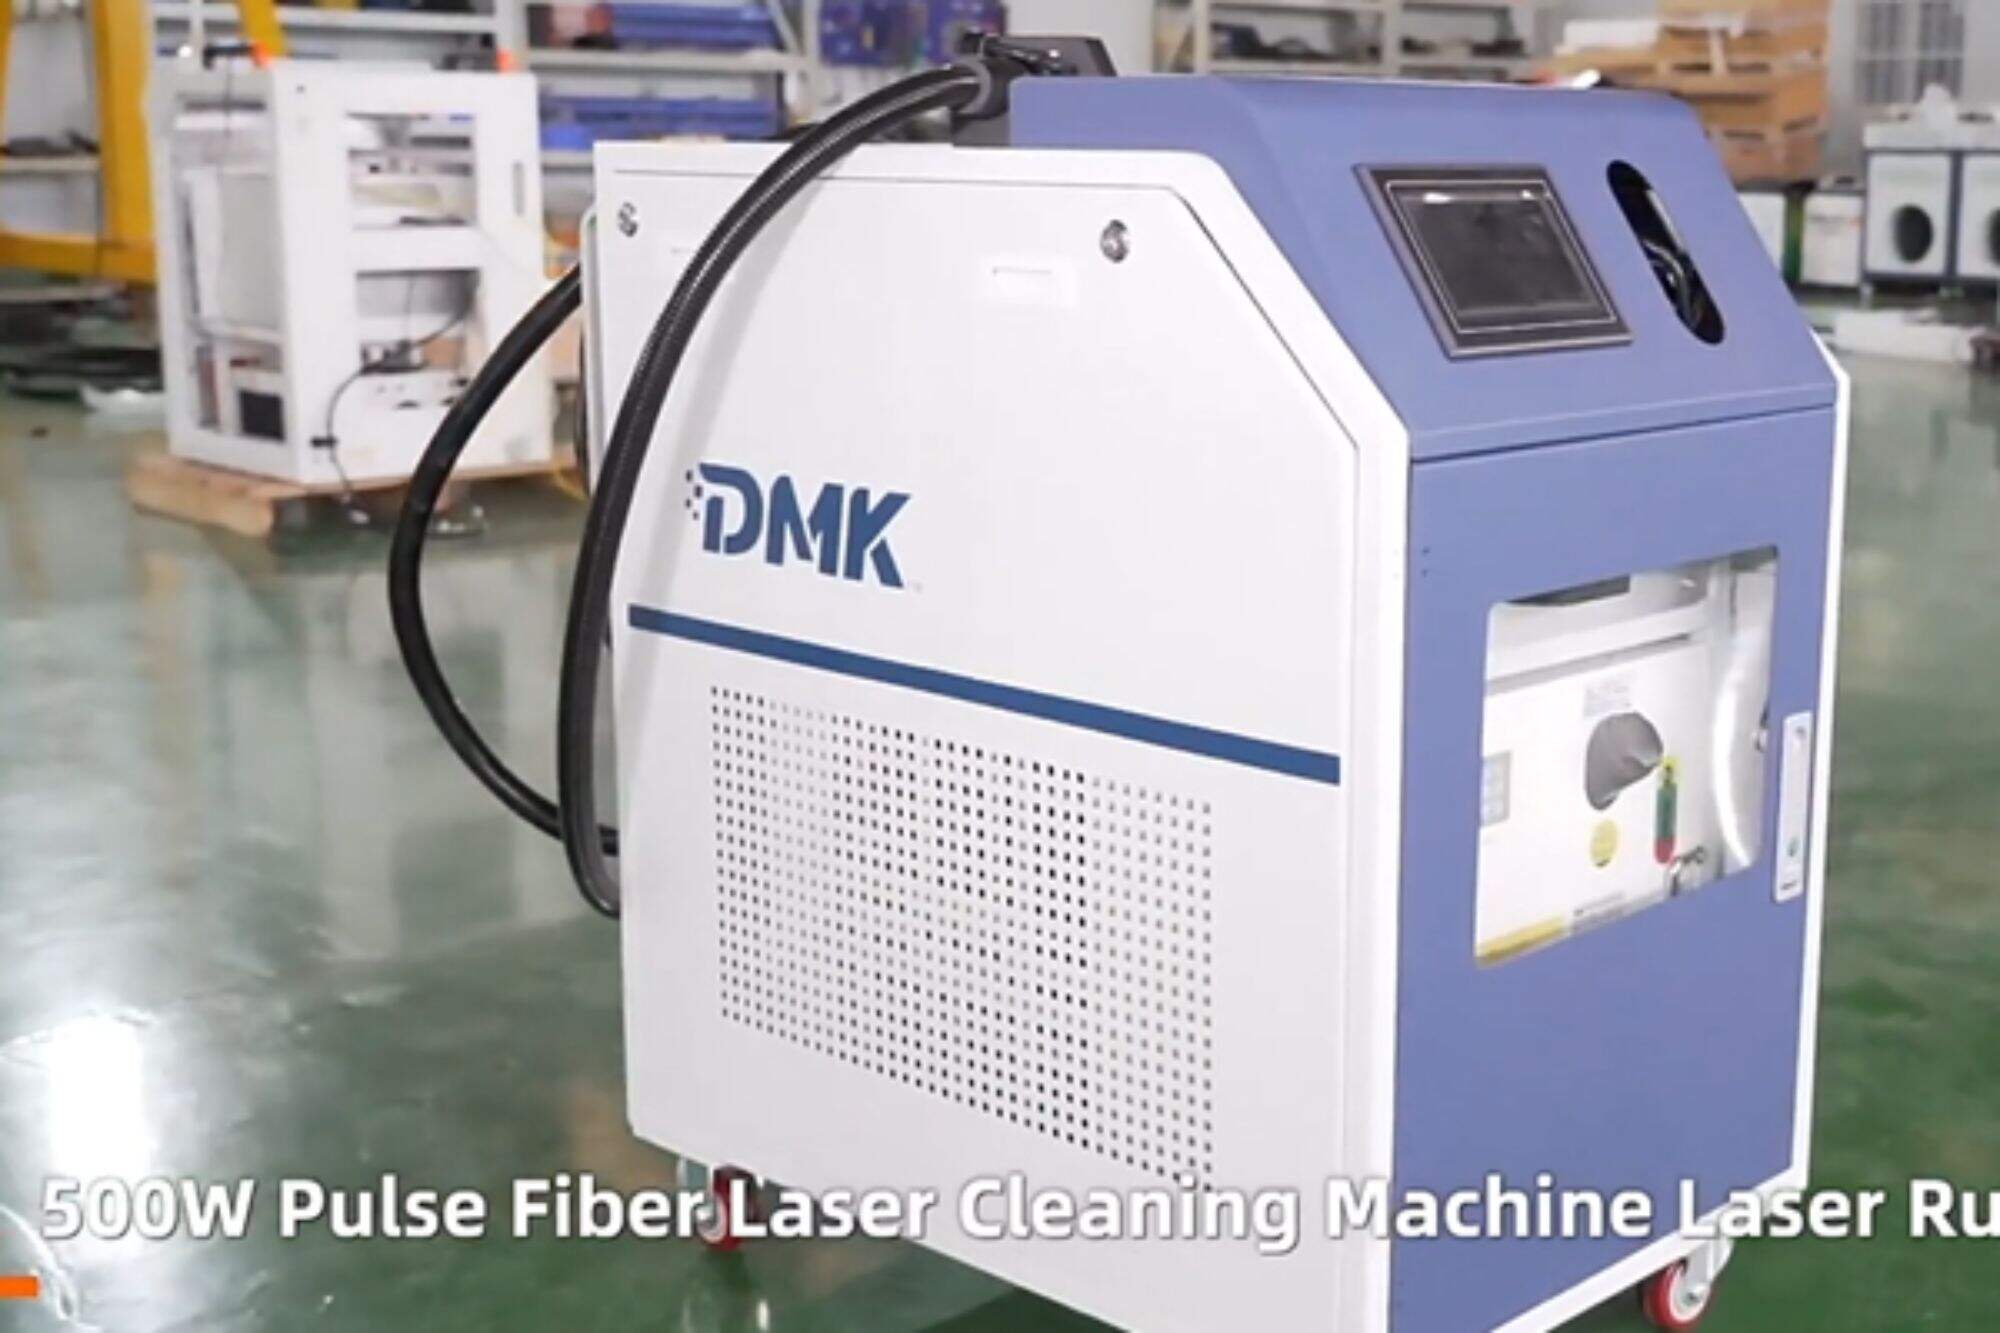 DMK 500w darbeli lazer temizleme makinesi